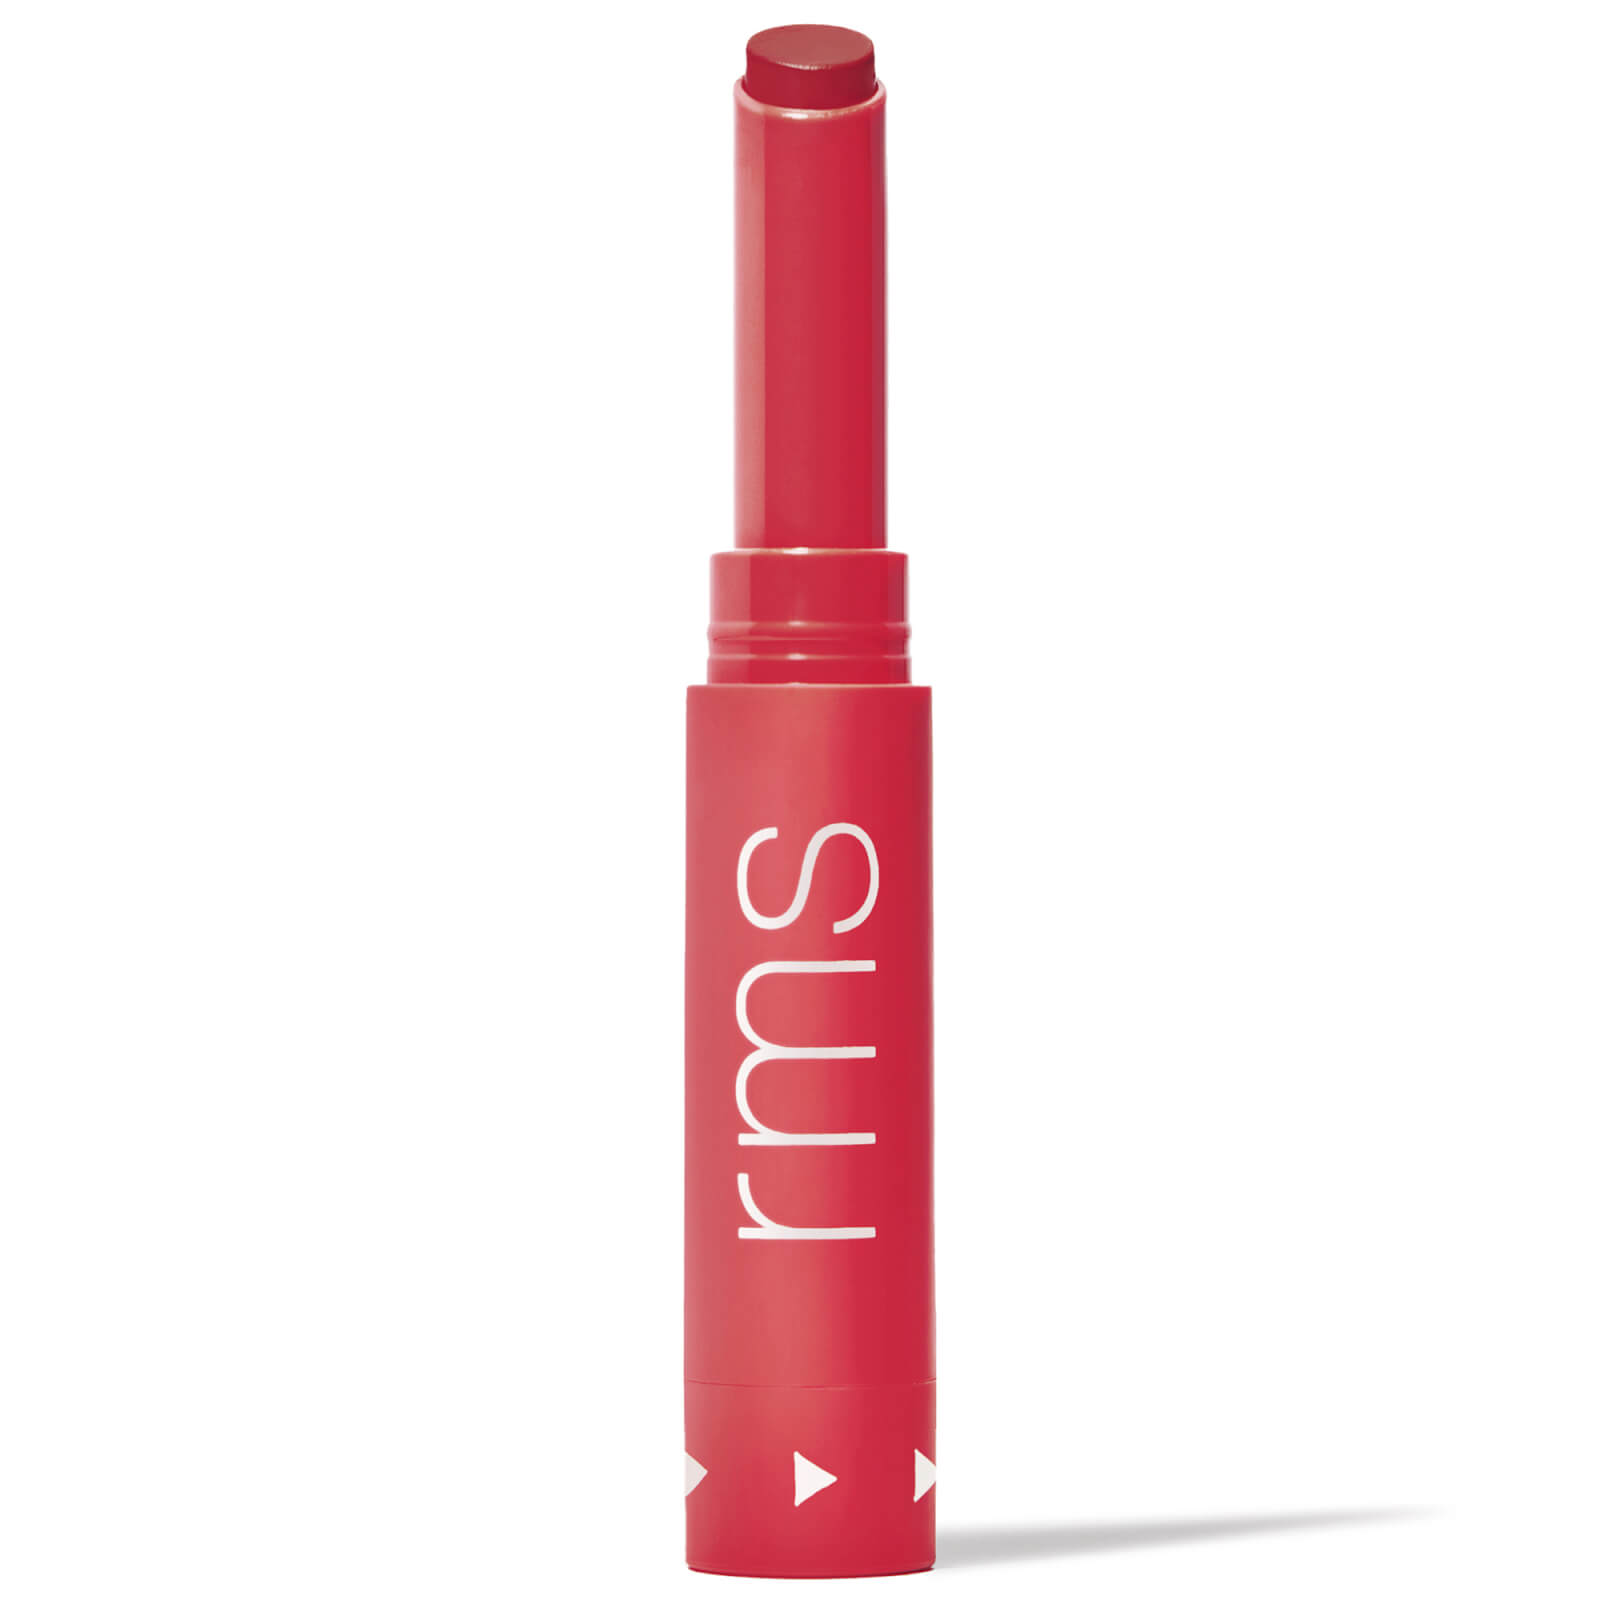 Rms Beauty Legendary Serum Lipstick 21g (various Shades) In Neutral